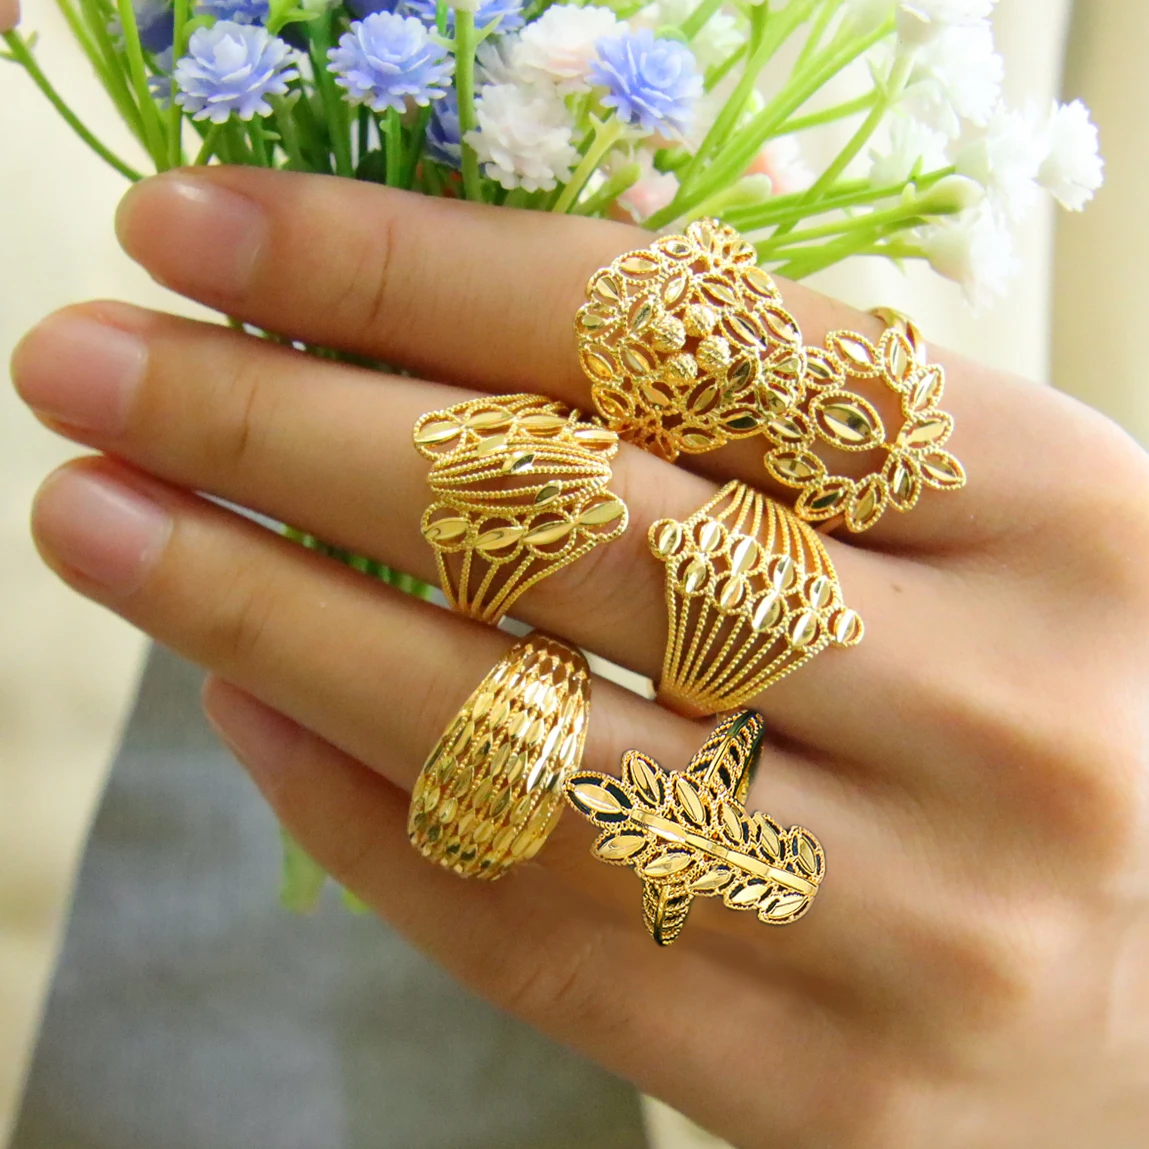 22k Gold Ring Beautiful Enameled Stone Studded Ladies Jewelry Select Size  Ring50 | eBay